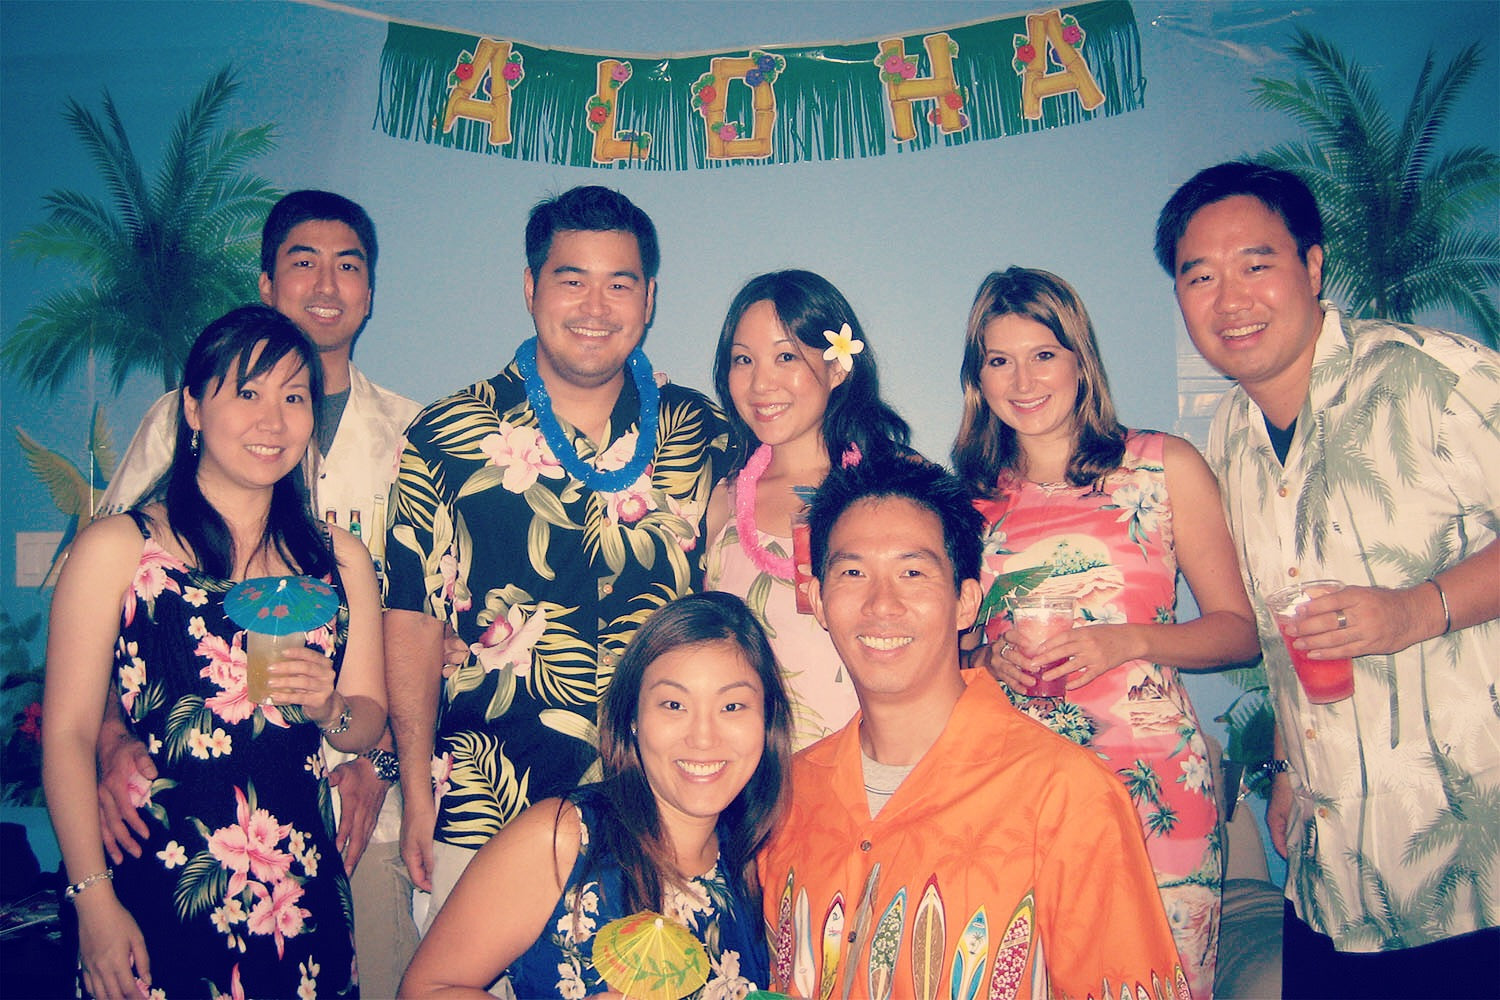 festive mini luau Hawaiian theme party in an apartment